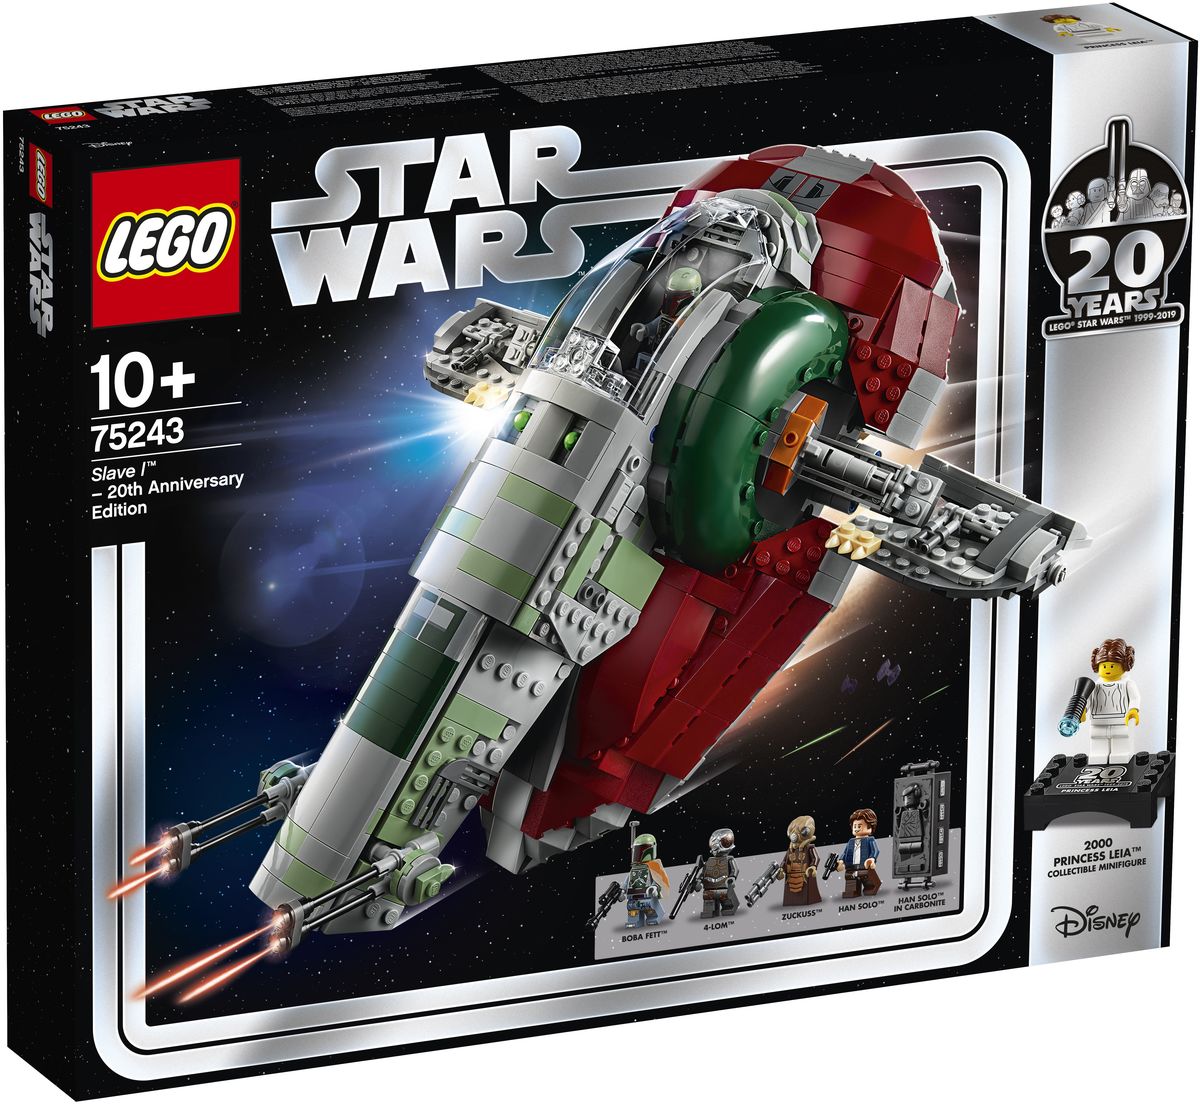 Brickfinder LEGO Star Wars 20th Anniversary Official Set Images!